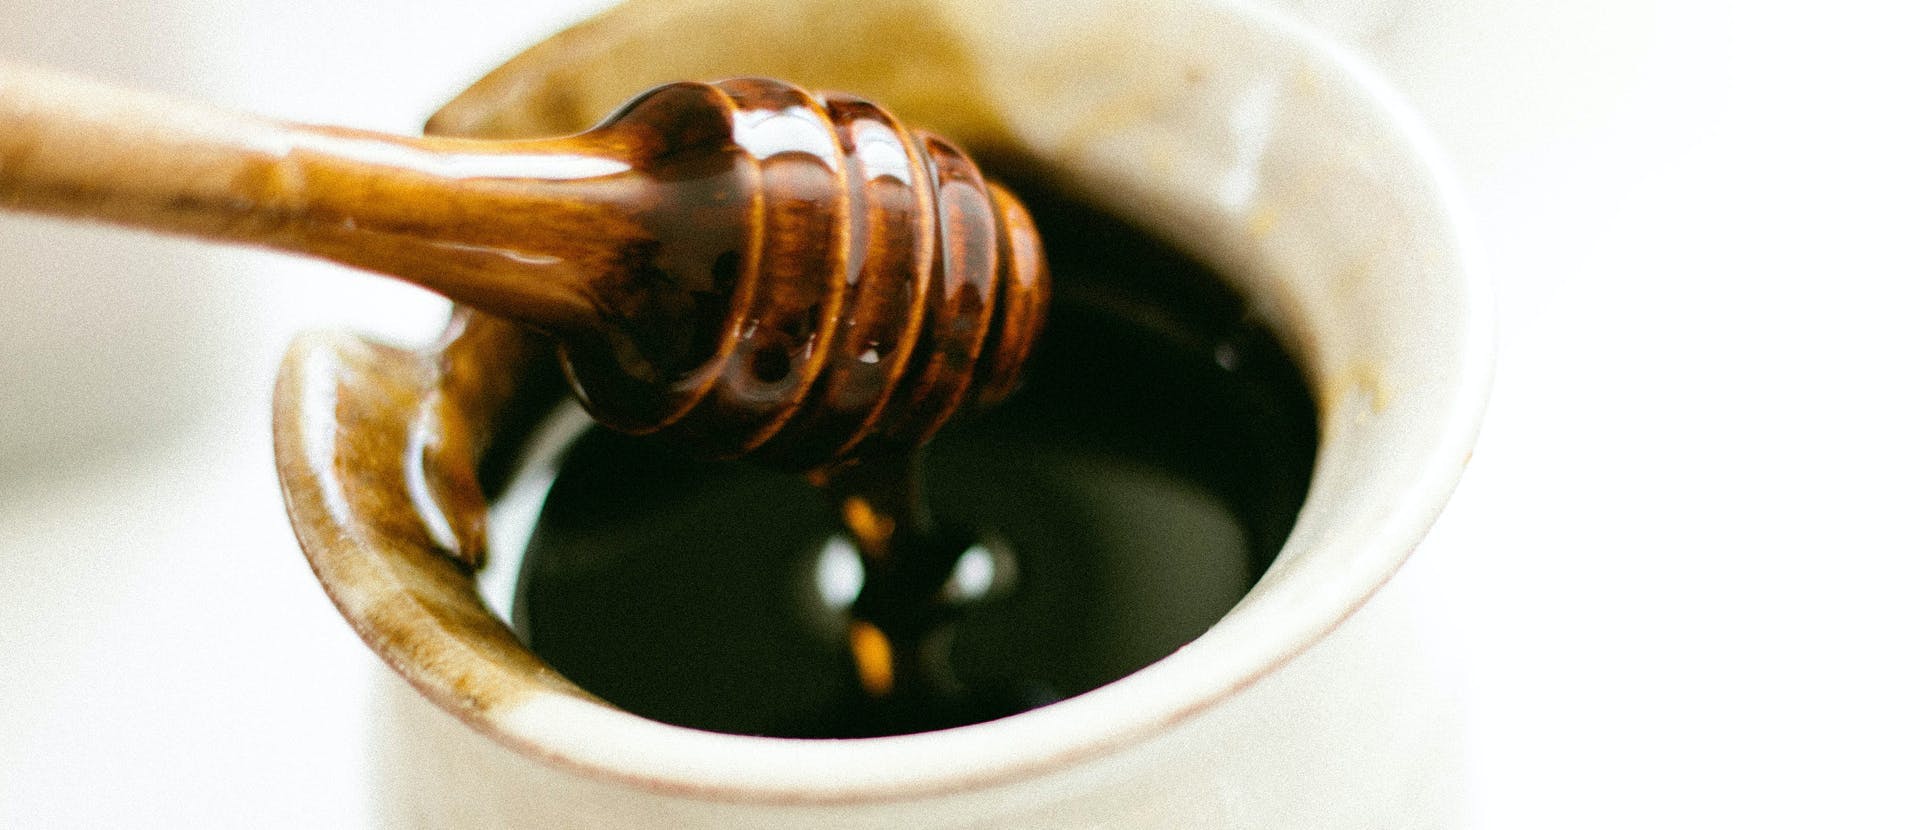 scrub miele da fare a casa ingredienti ricetta